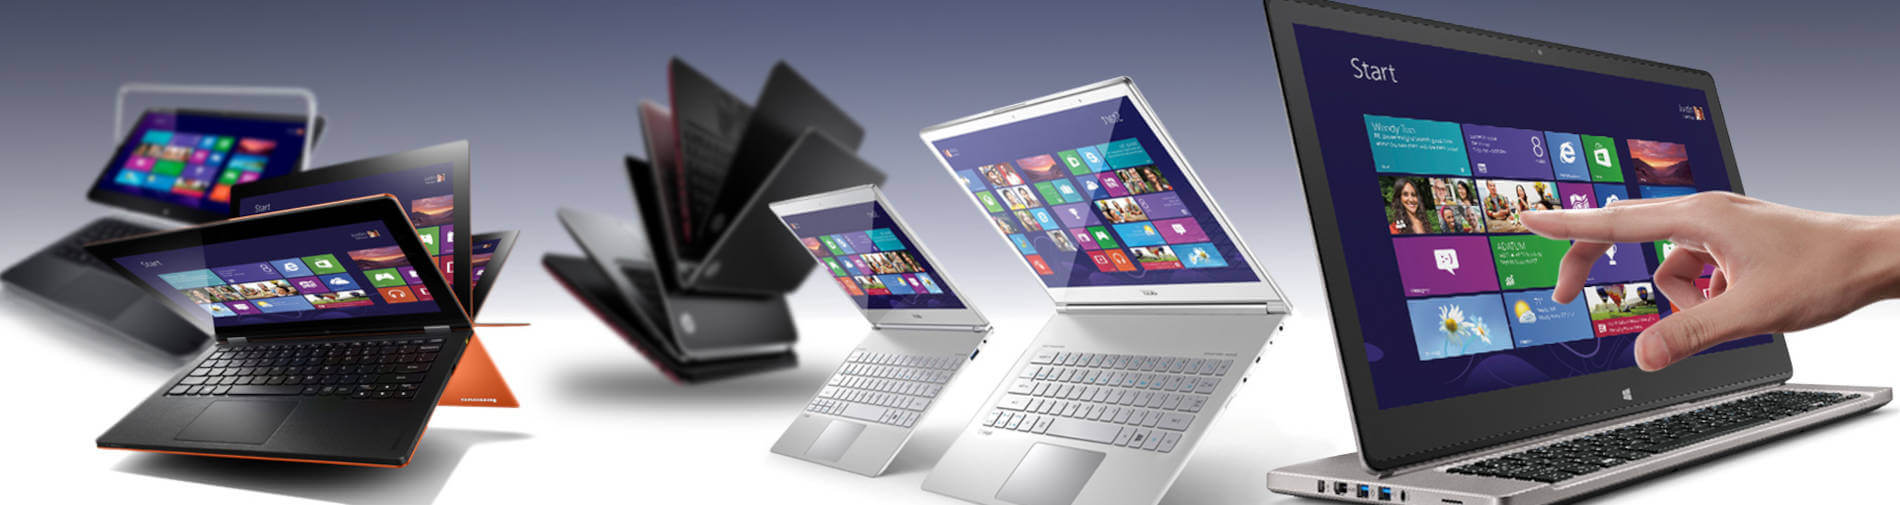 Mini-Laptop.ro - Catalog online de laptopuri